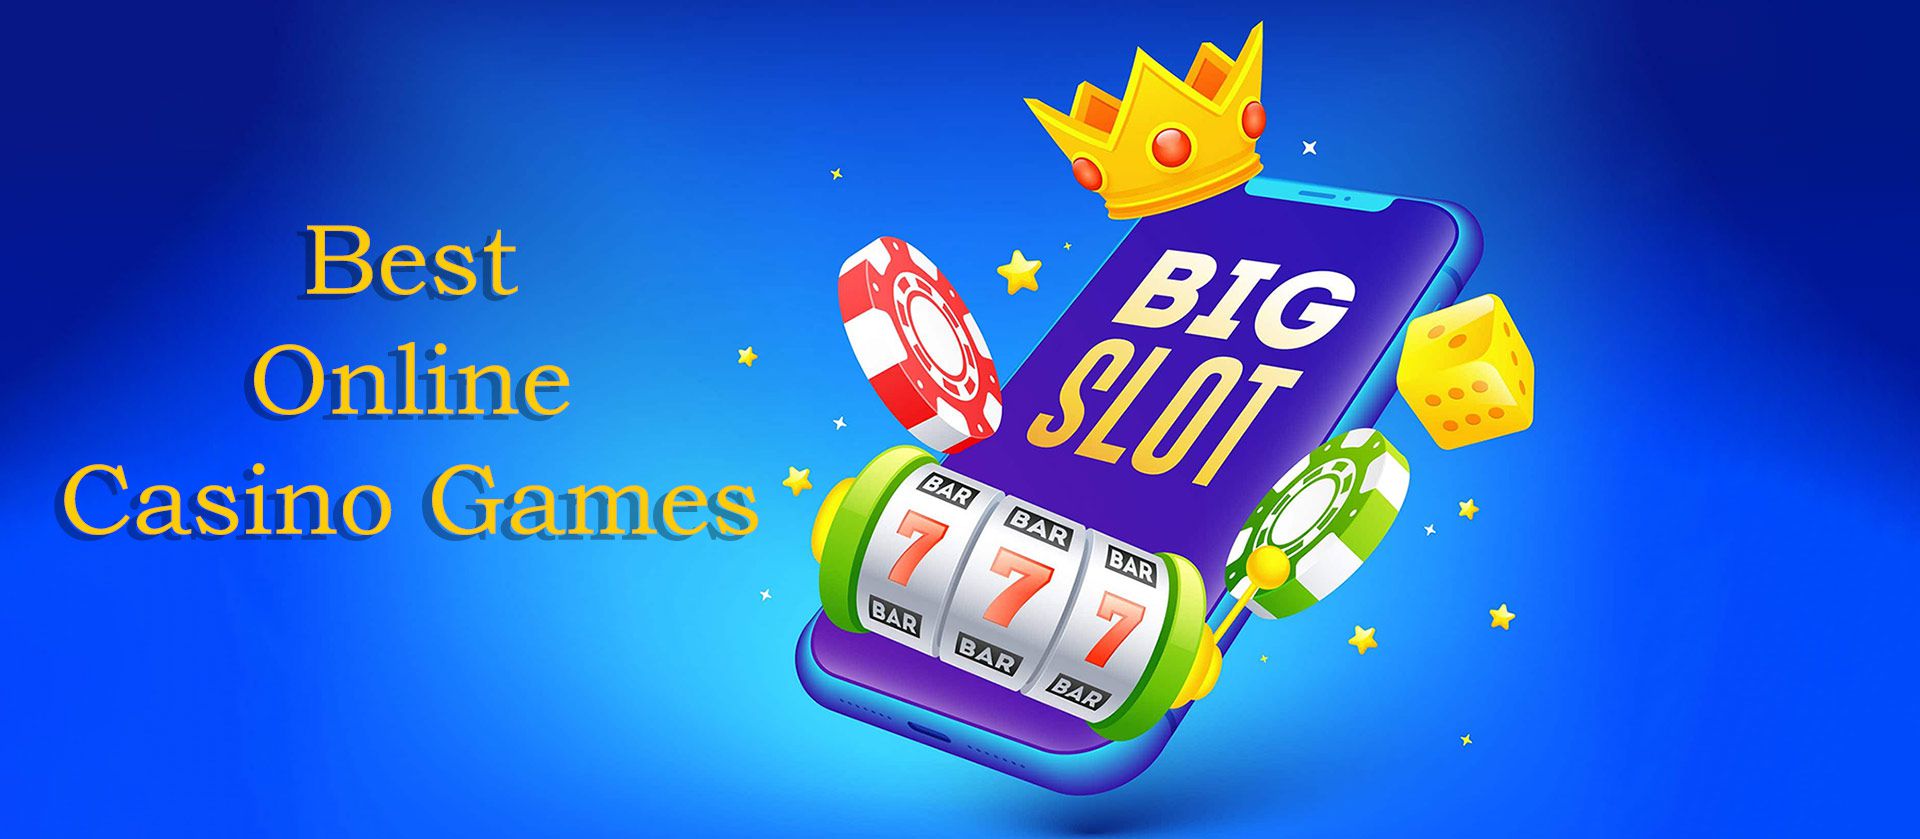 Best online casino games in Australia.